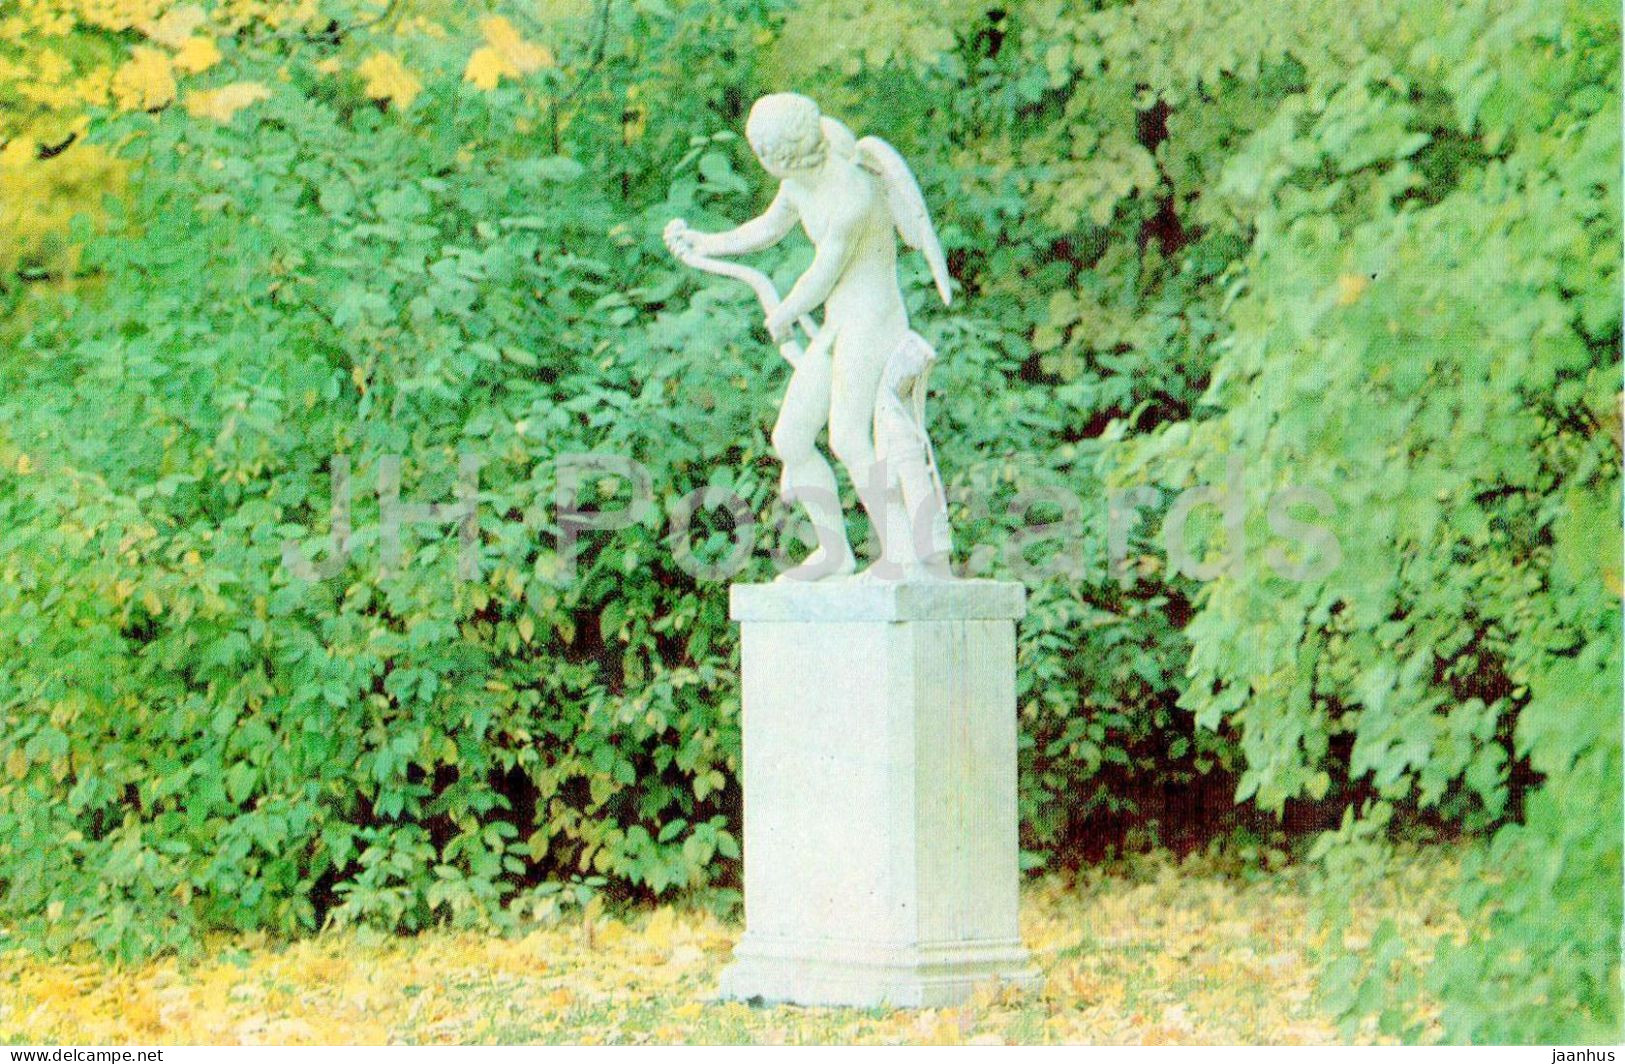 Lomonosov - Cupid Statue - 1978 - Russia USSR - Unused - Rusia